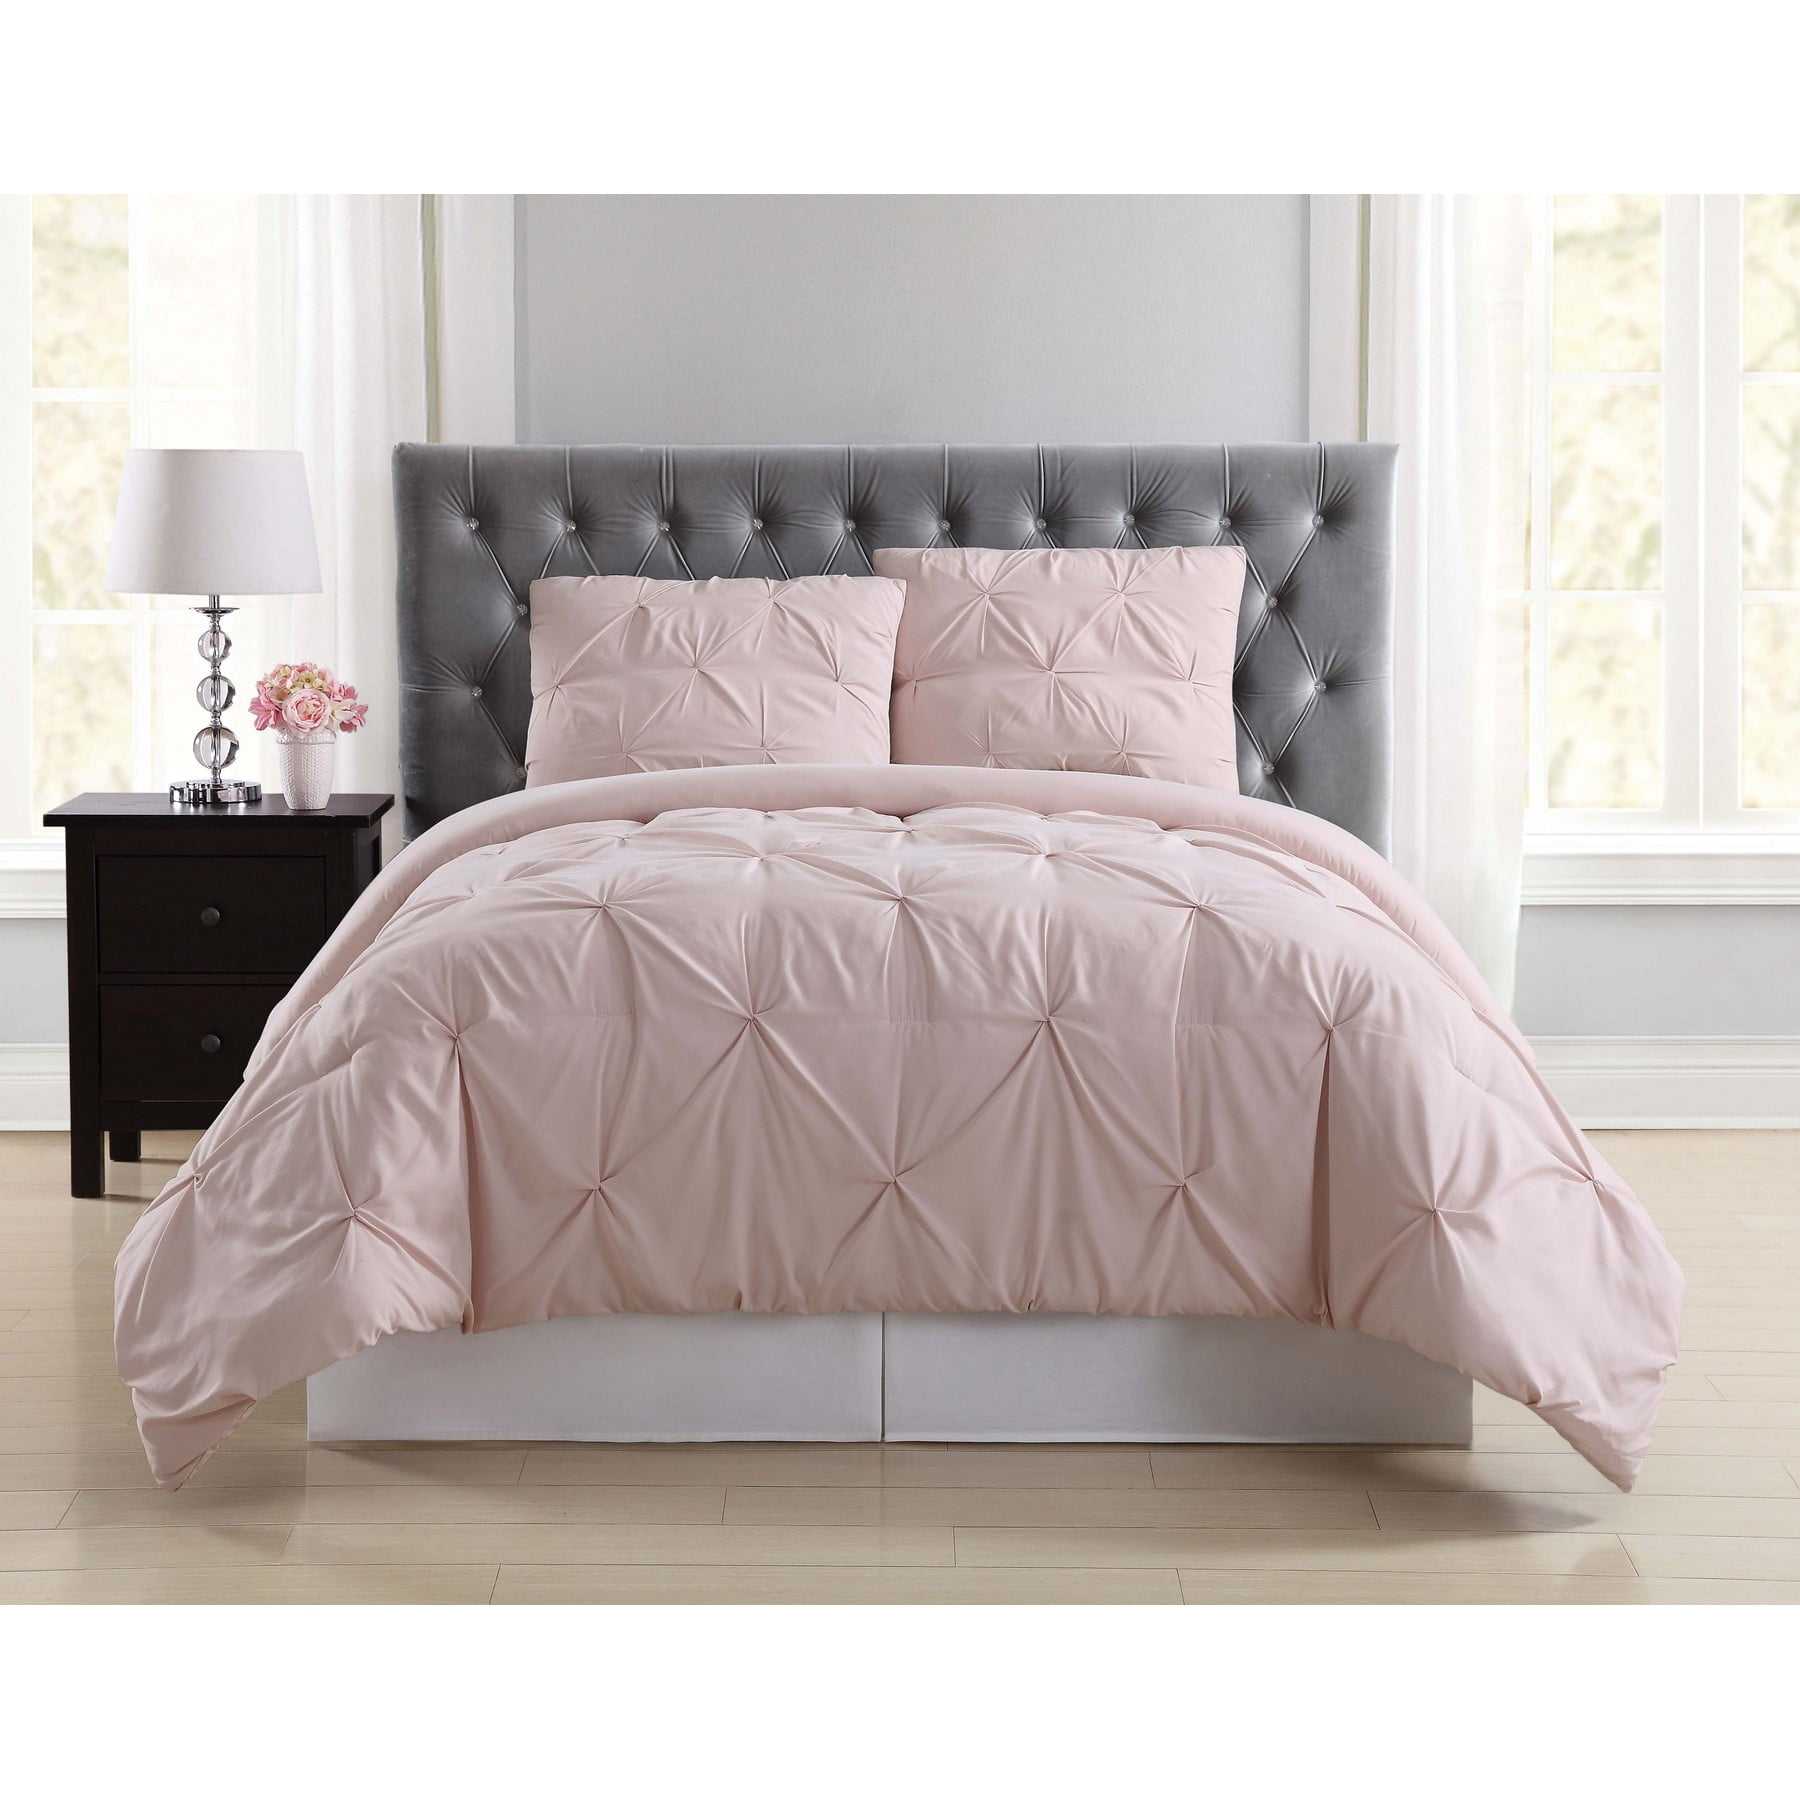 blush rose colored bedding